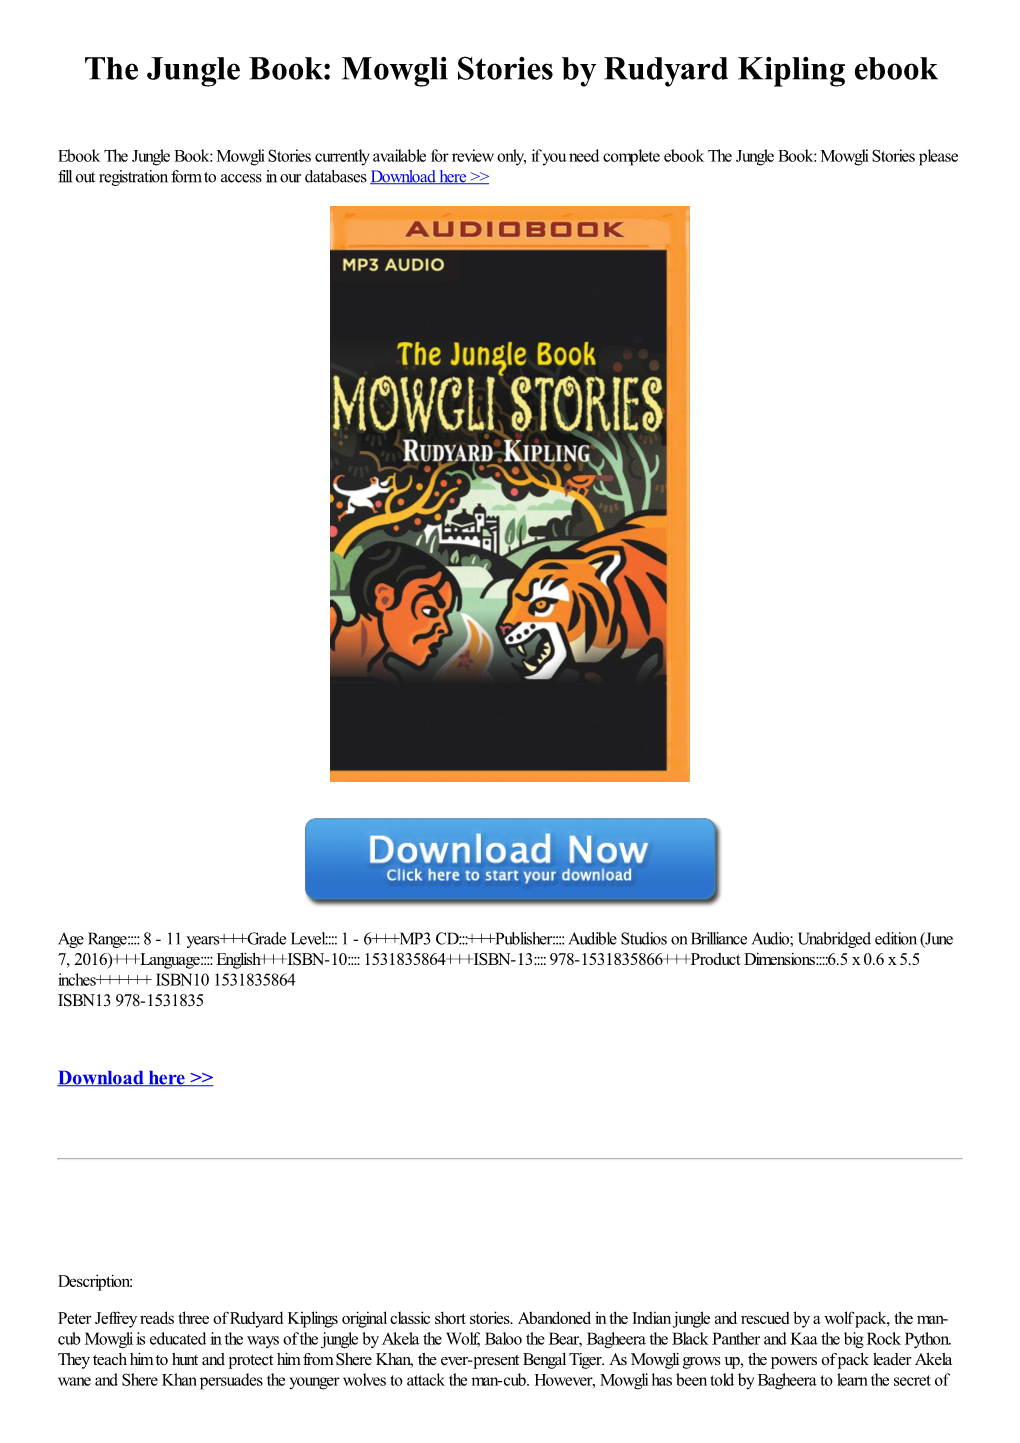 The Jungle Book: Mowgli Stories by Rudyard Kipling Ebook